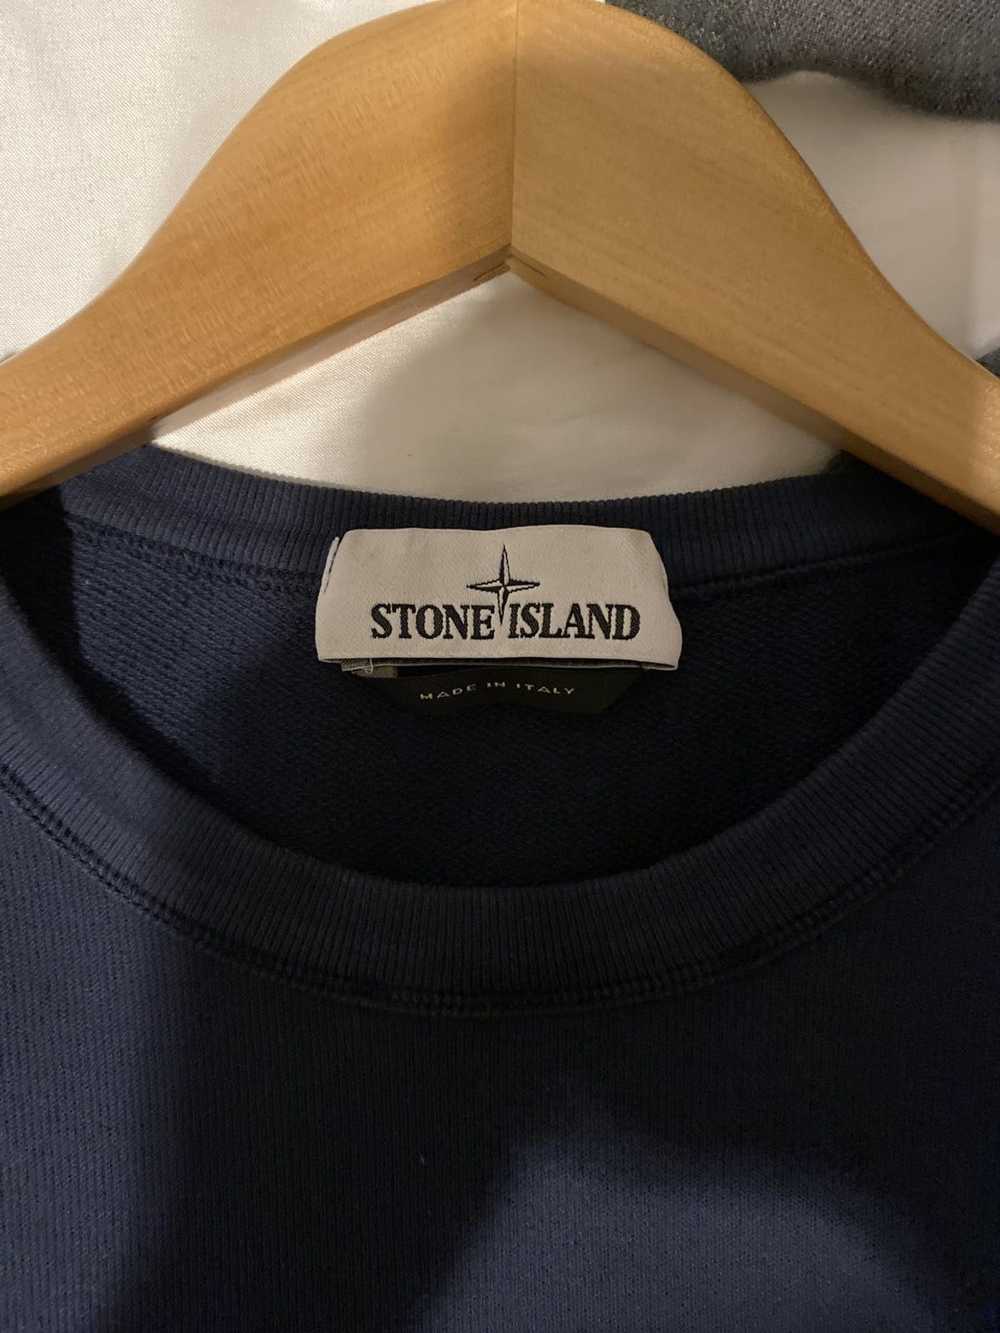 Stone Island Stone Island Sweater - image 5